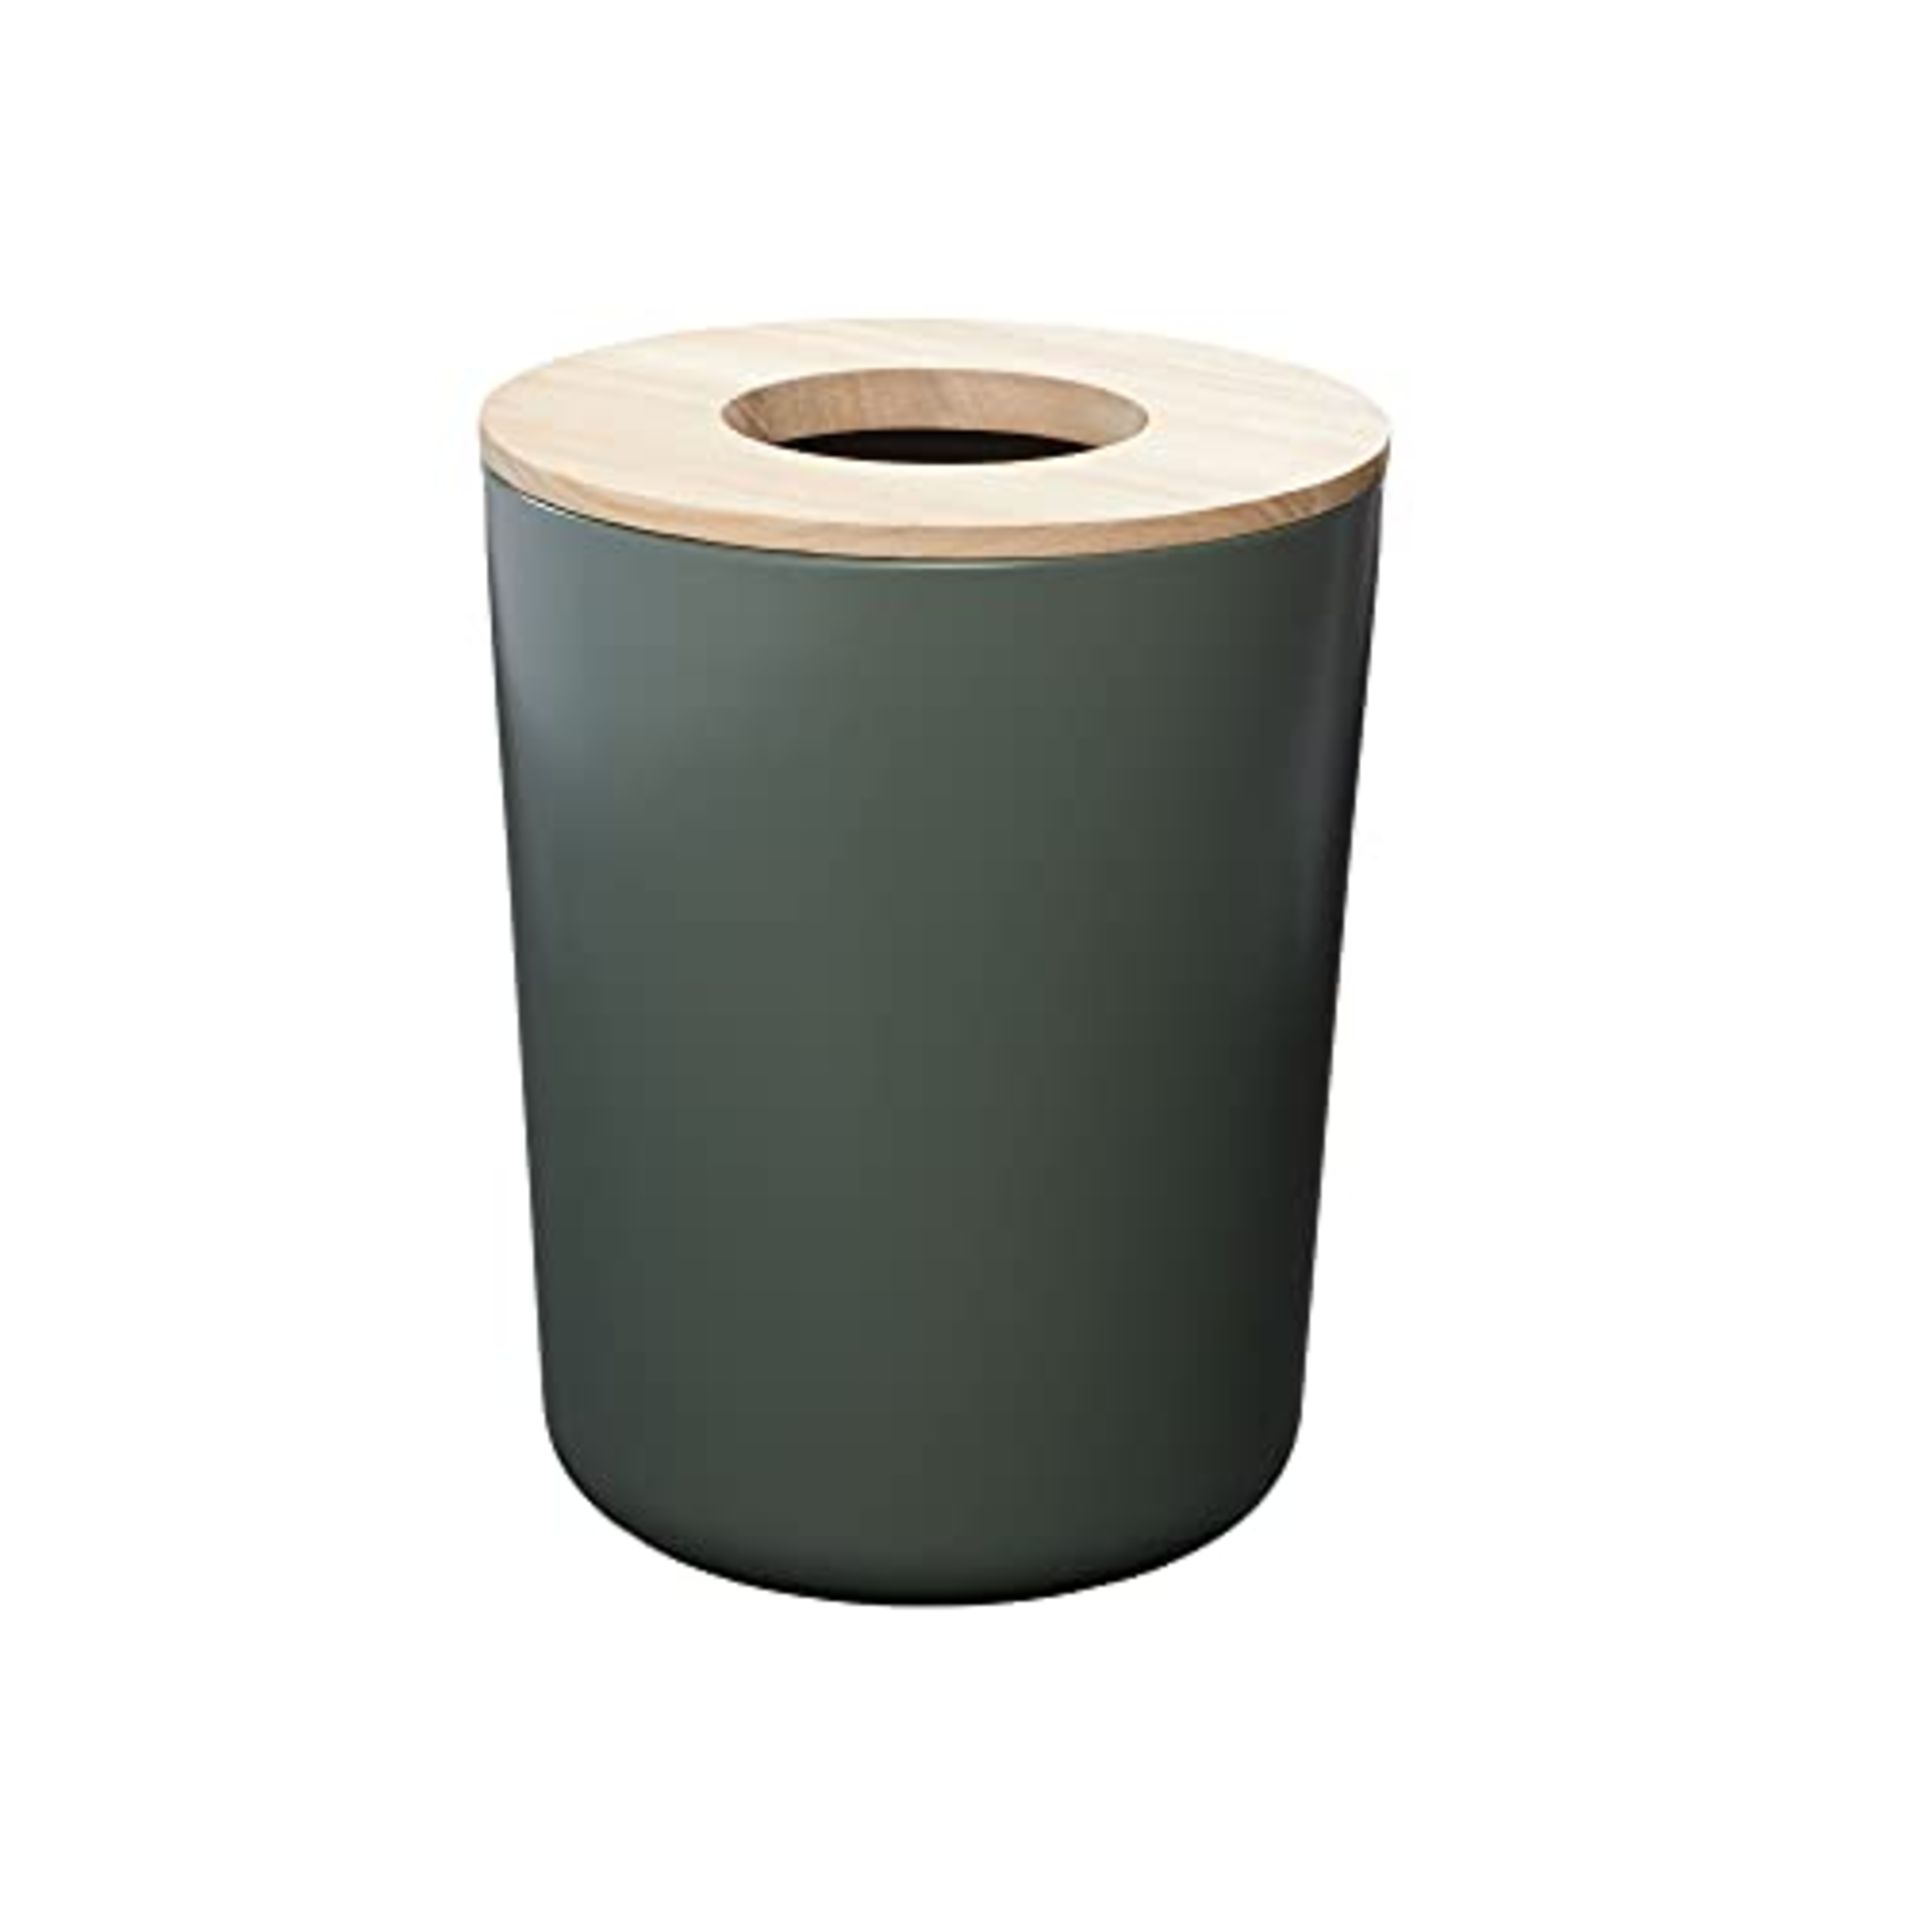 [INCOMPLETE] iDesign Eco Vanity Steel Bin, Versatile Home Dustbin, Made from Metal and